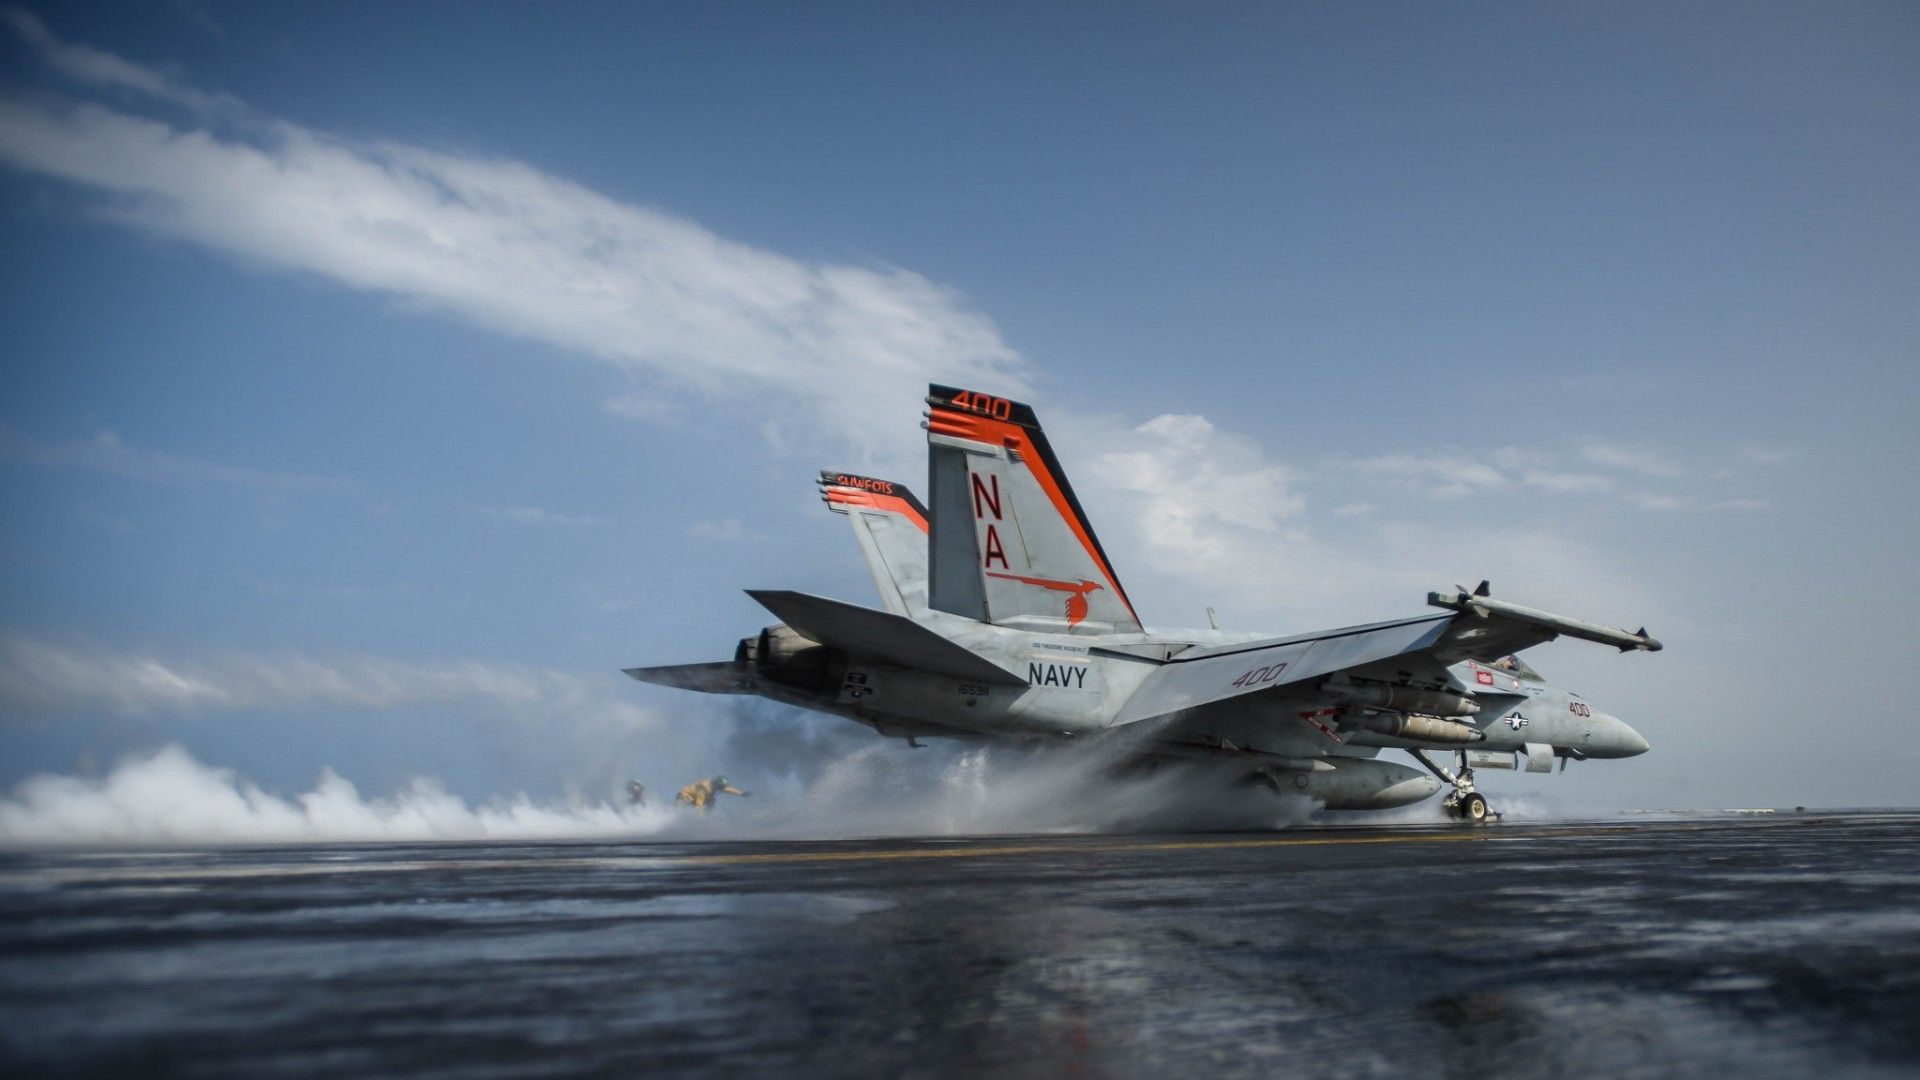 Fot. U.S. Navy. Alex Corona/Flickr, CC BBY 2.0